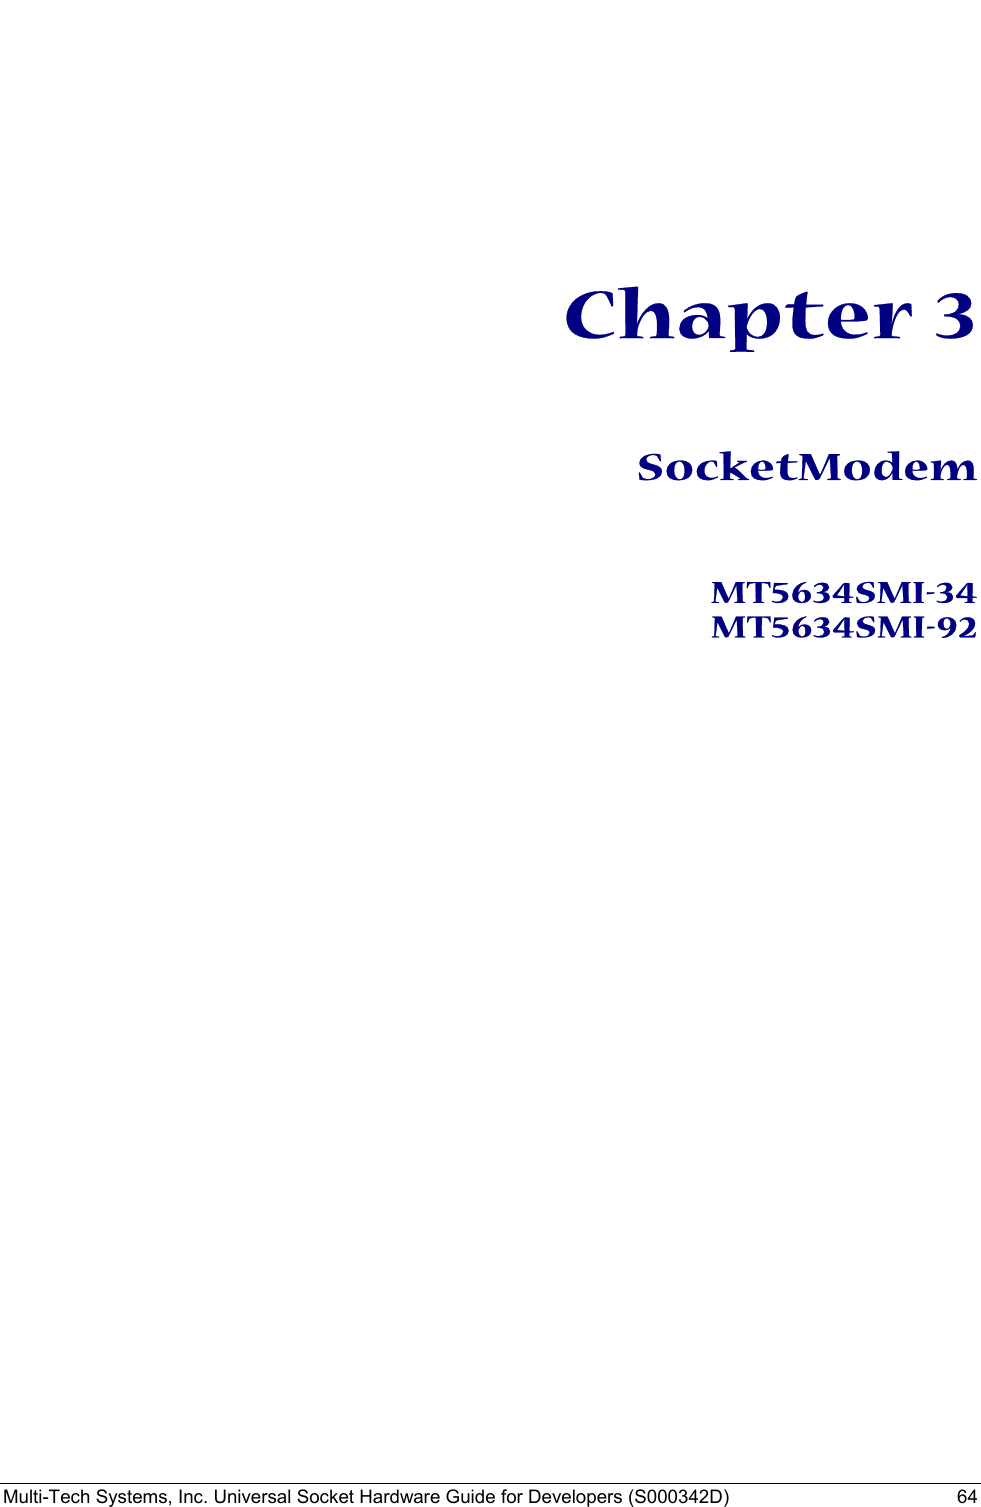  Multi-Tech Systems, Inc. Universal Socket Hardware Guide for Developers (S000342D)  64         Chapter 3   SocketModem   MT5634SMI-34 MT5634SMI-92    